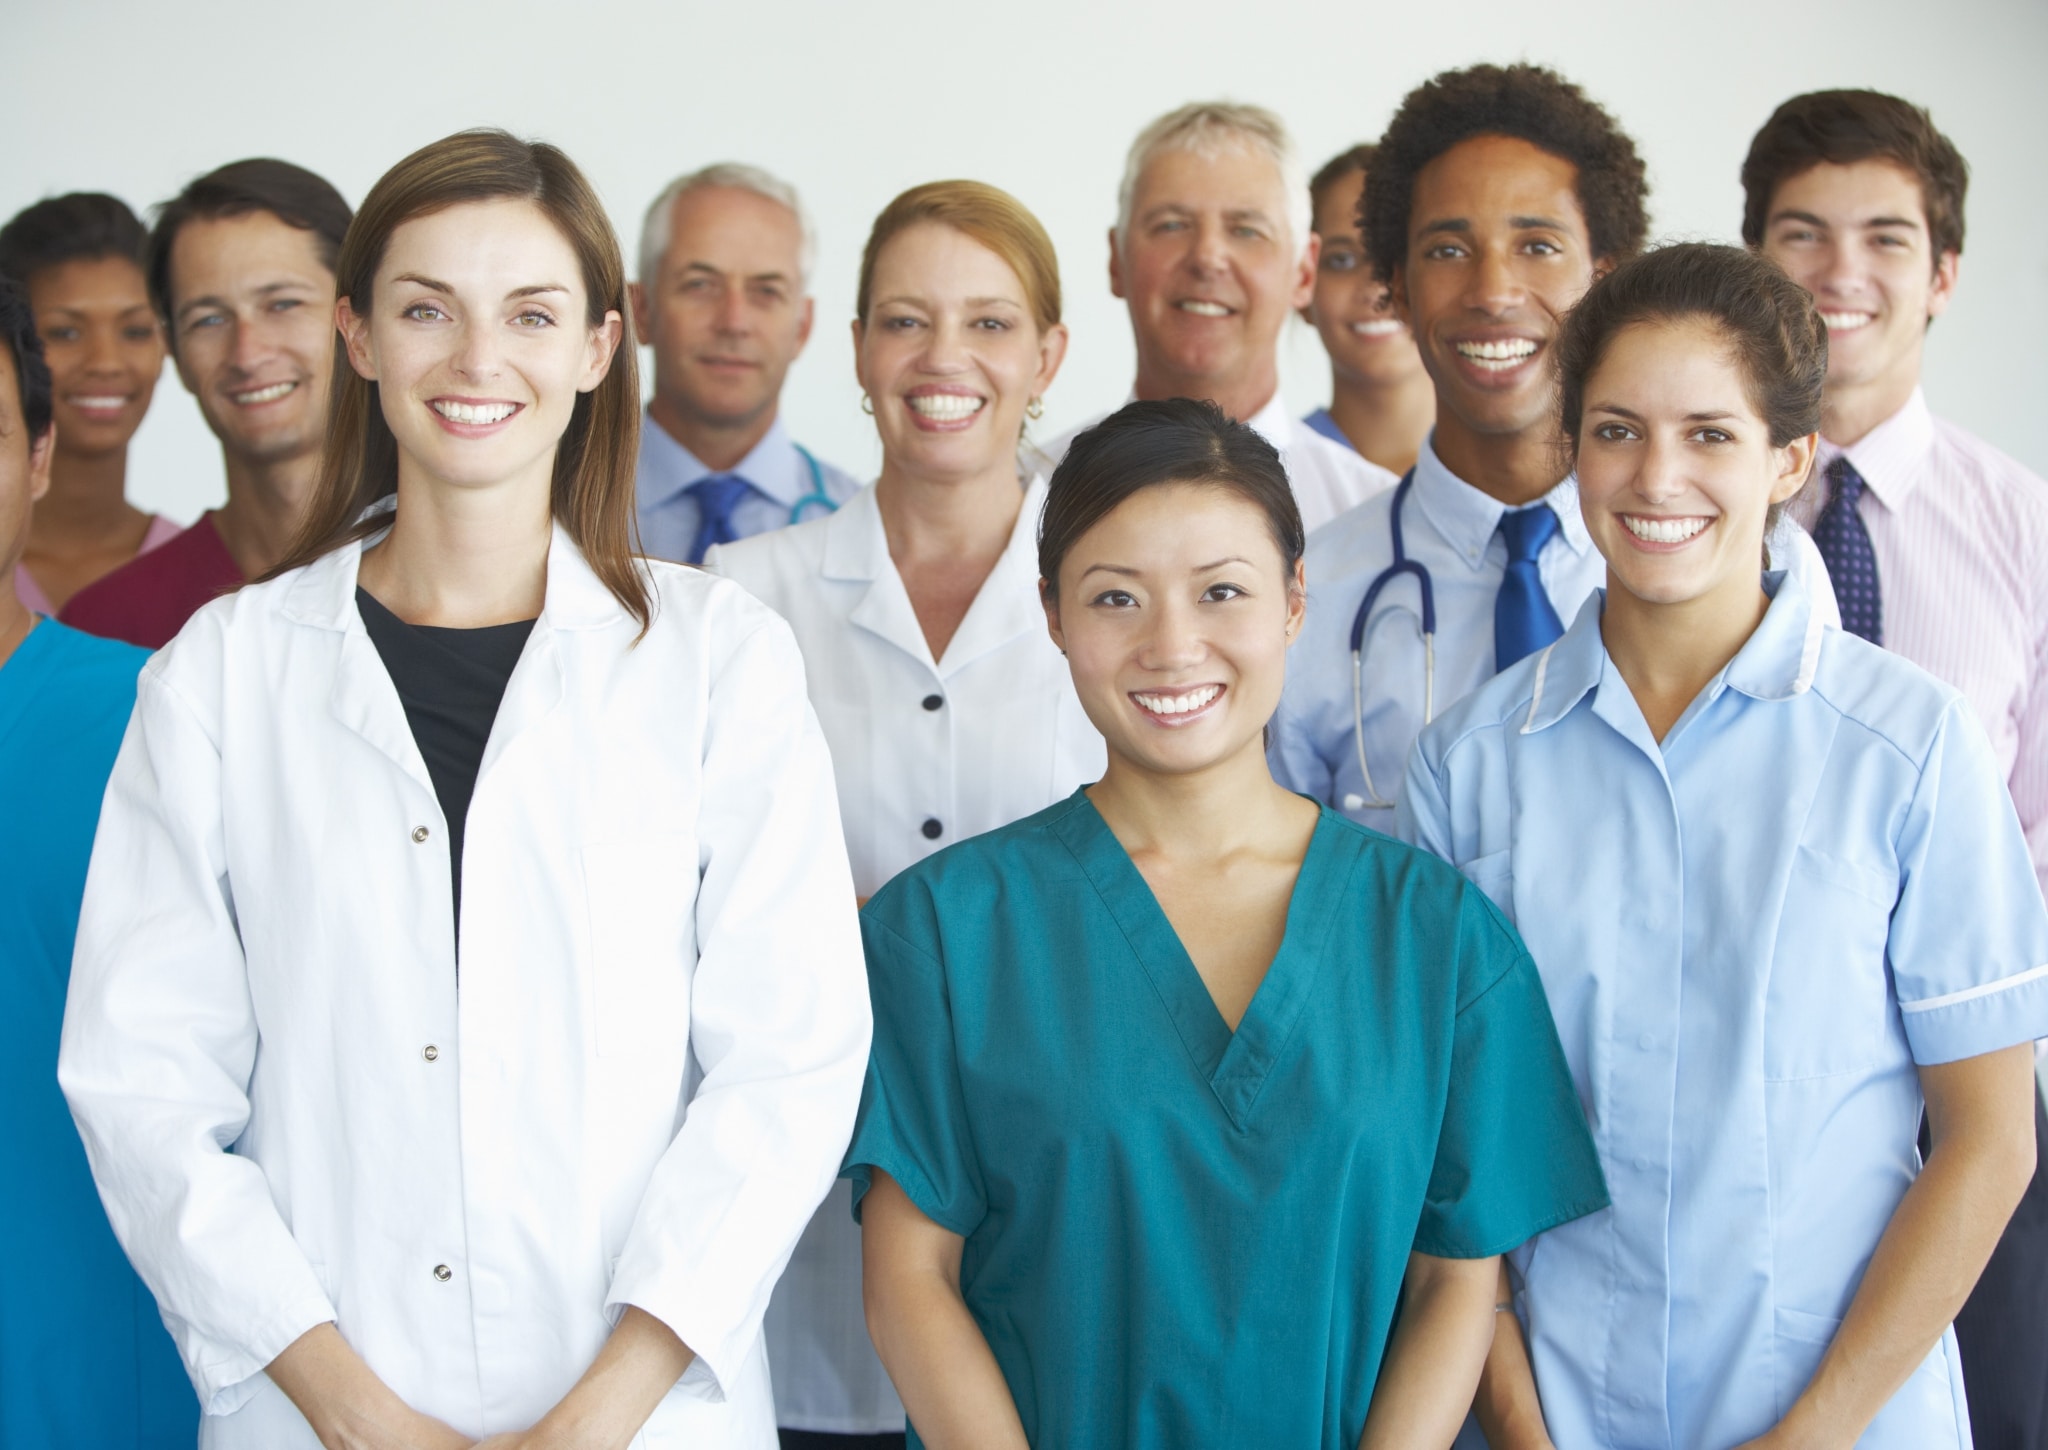 Portrait of a medical team